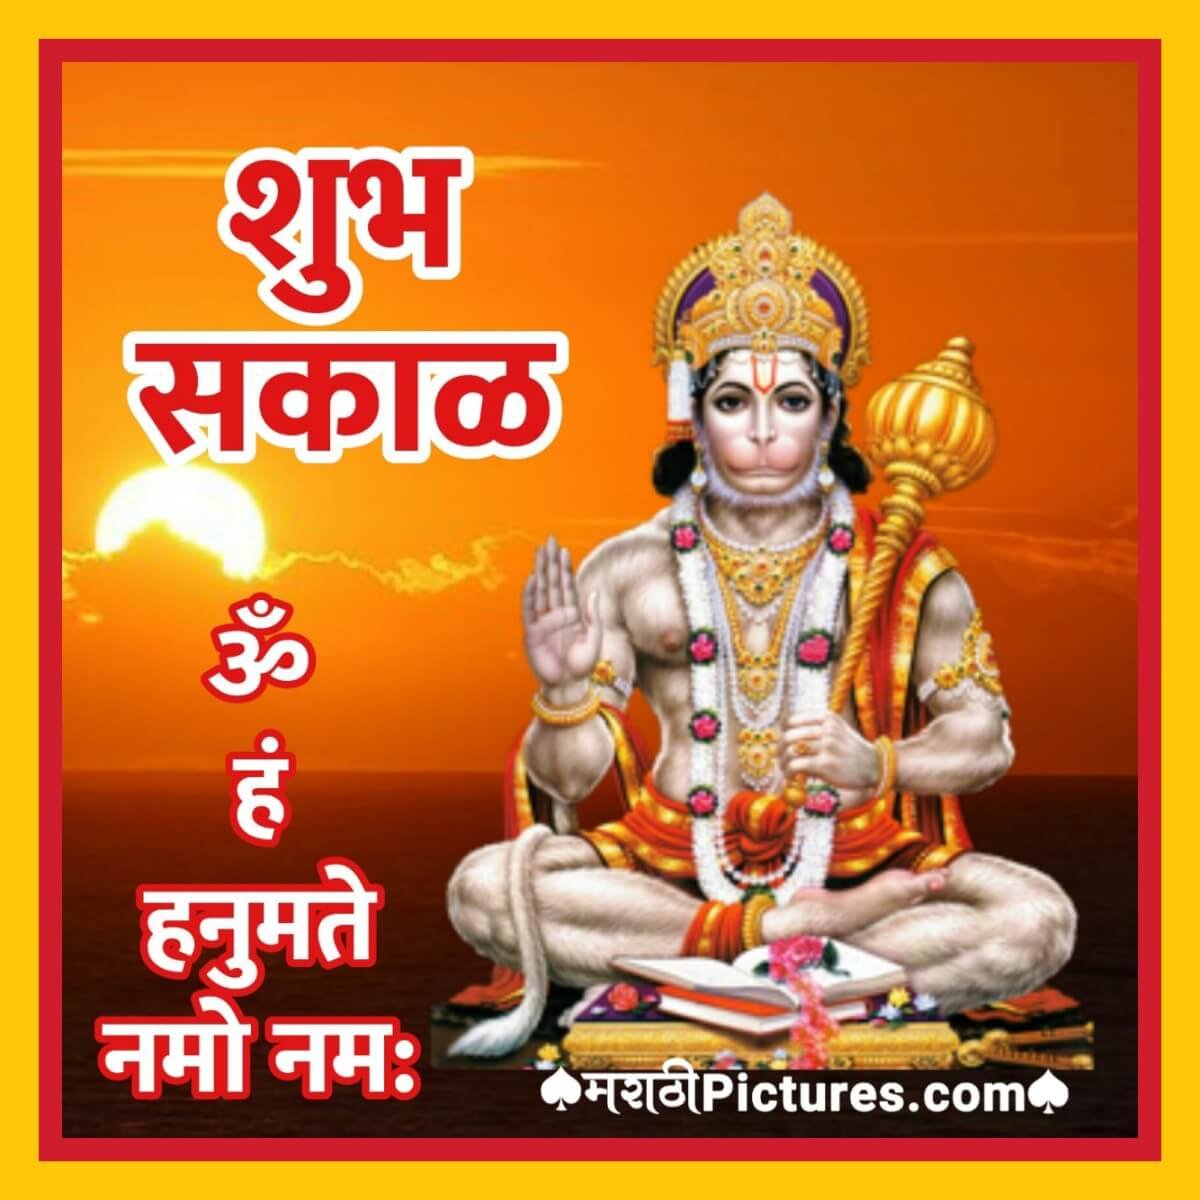 Shubh Sakal Hanuman Mantra